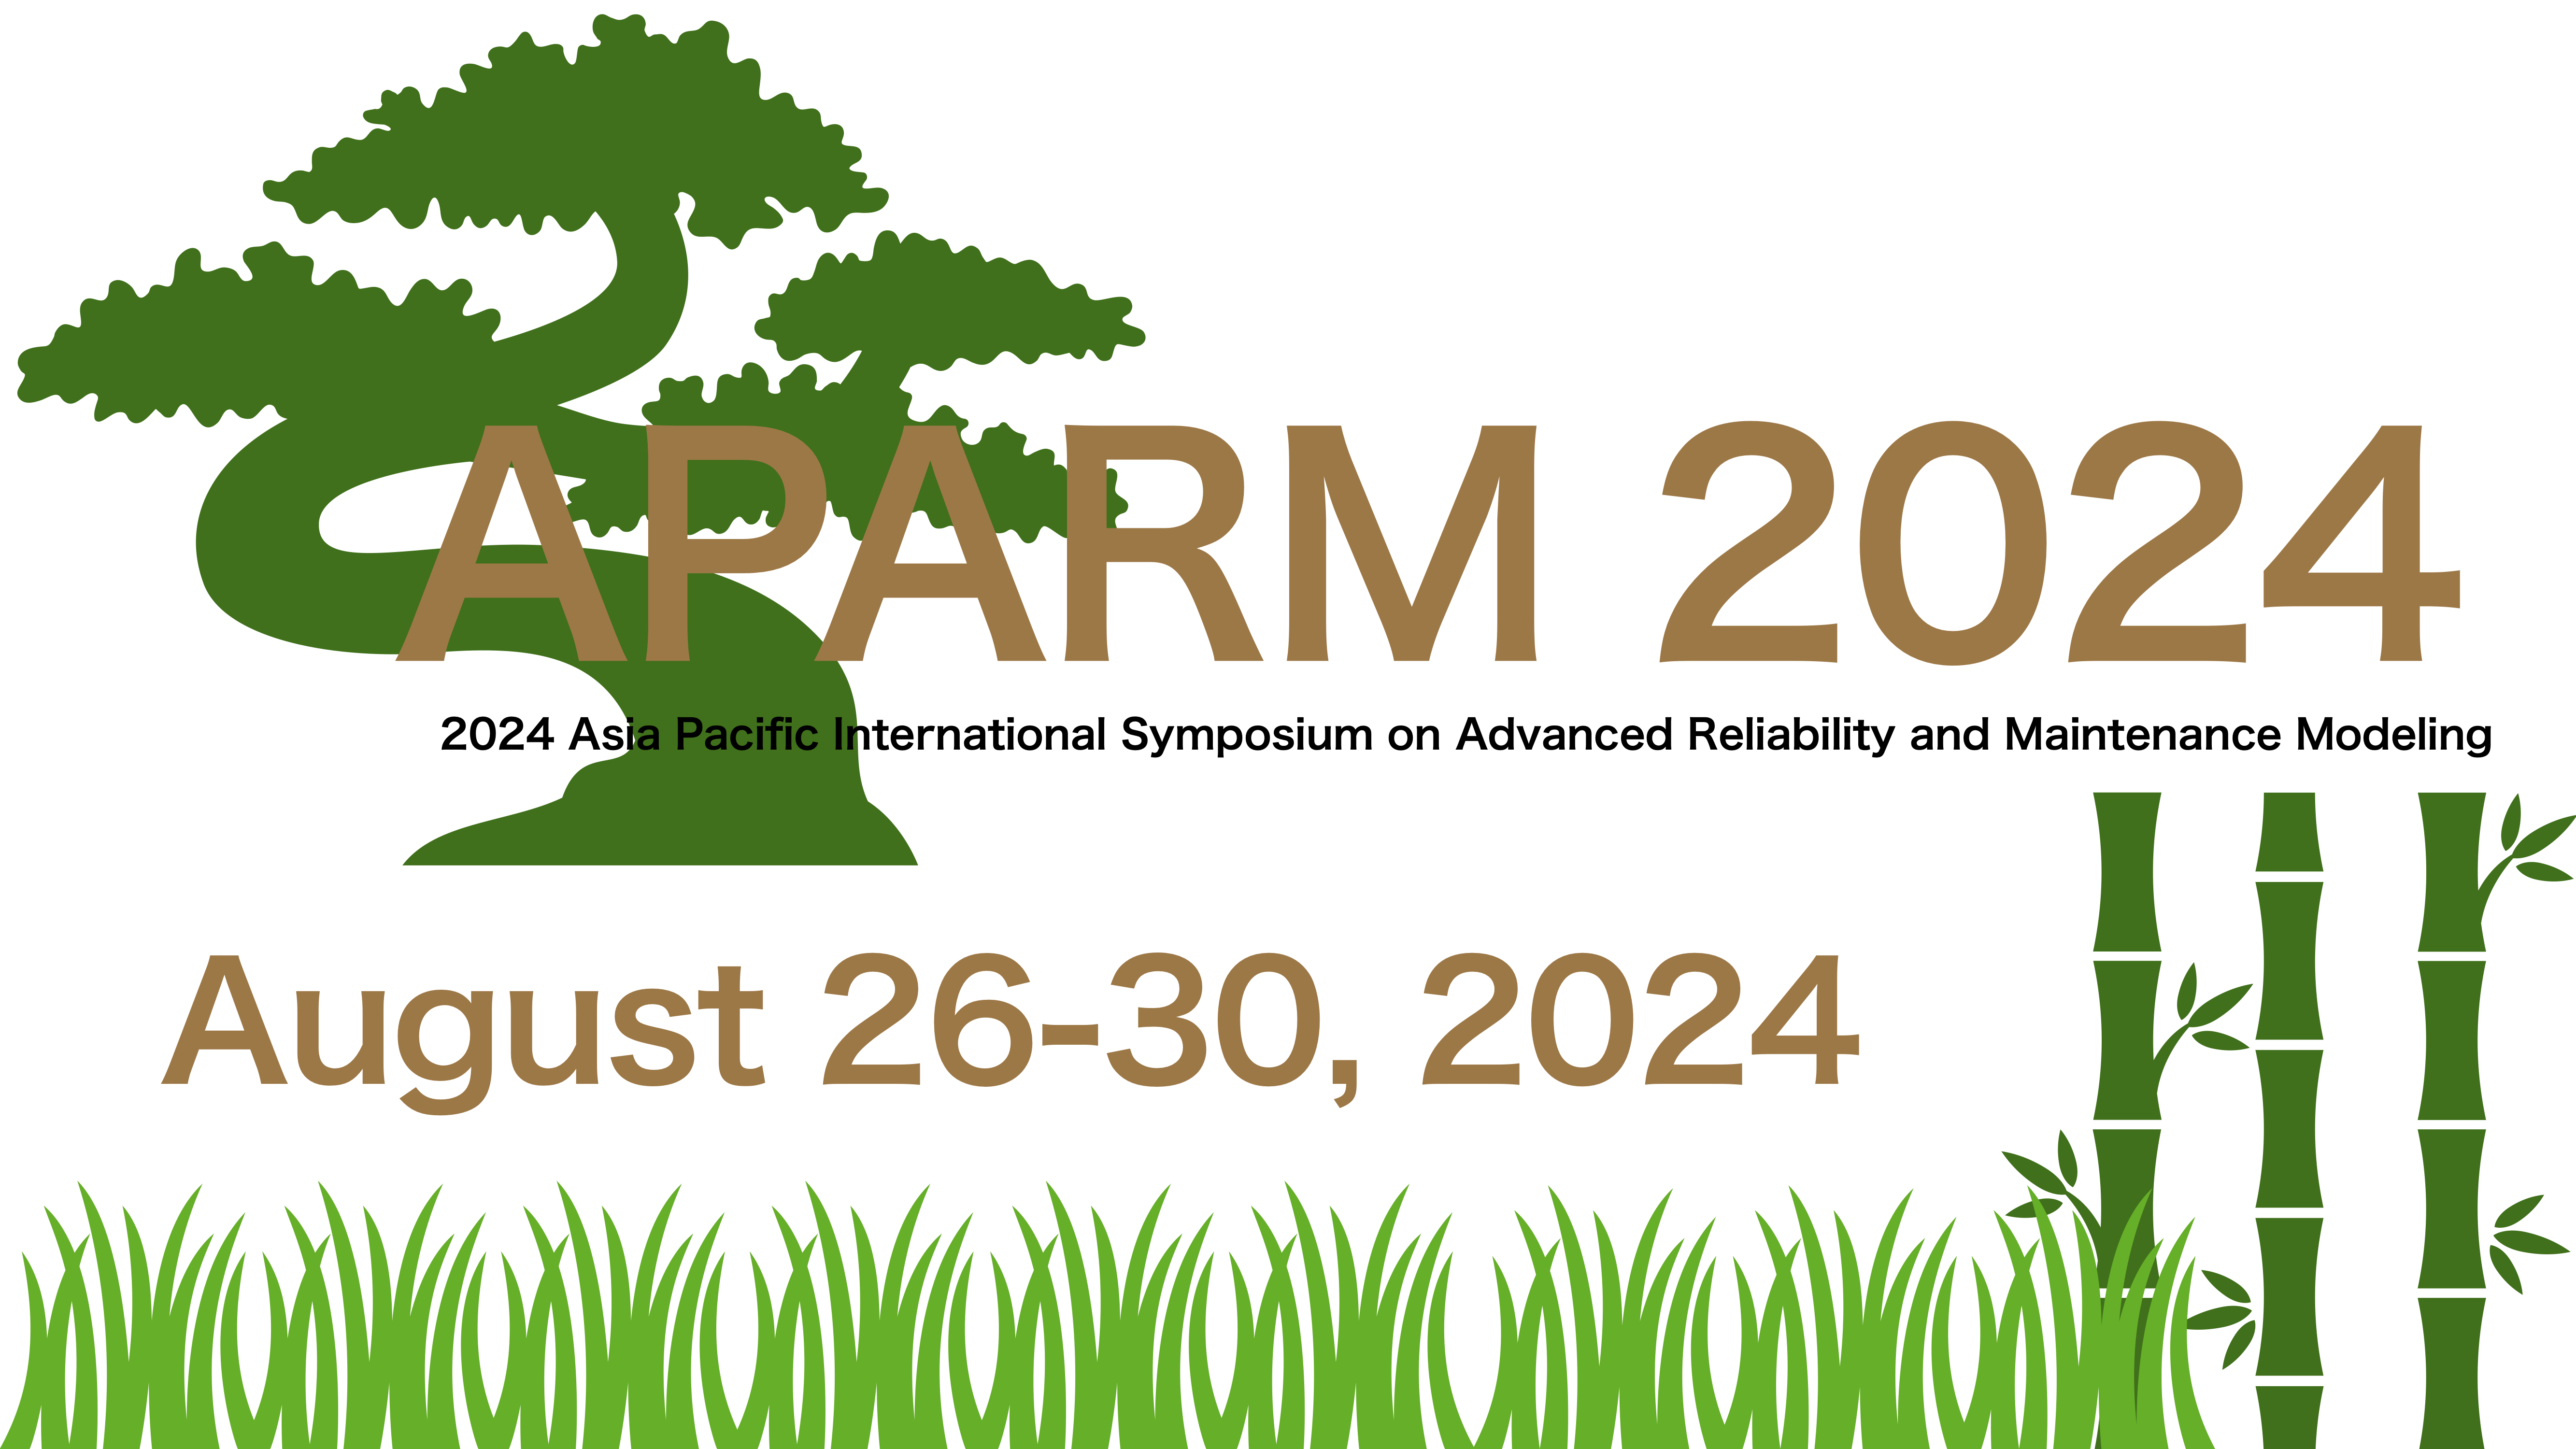 2020 International Symposium on Emerging Technologies for Communications